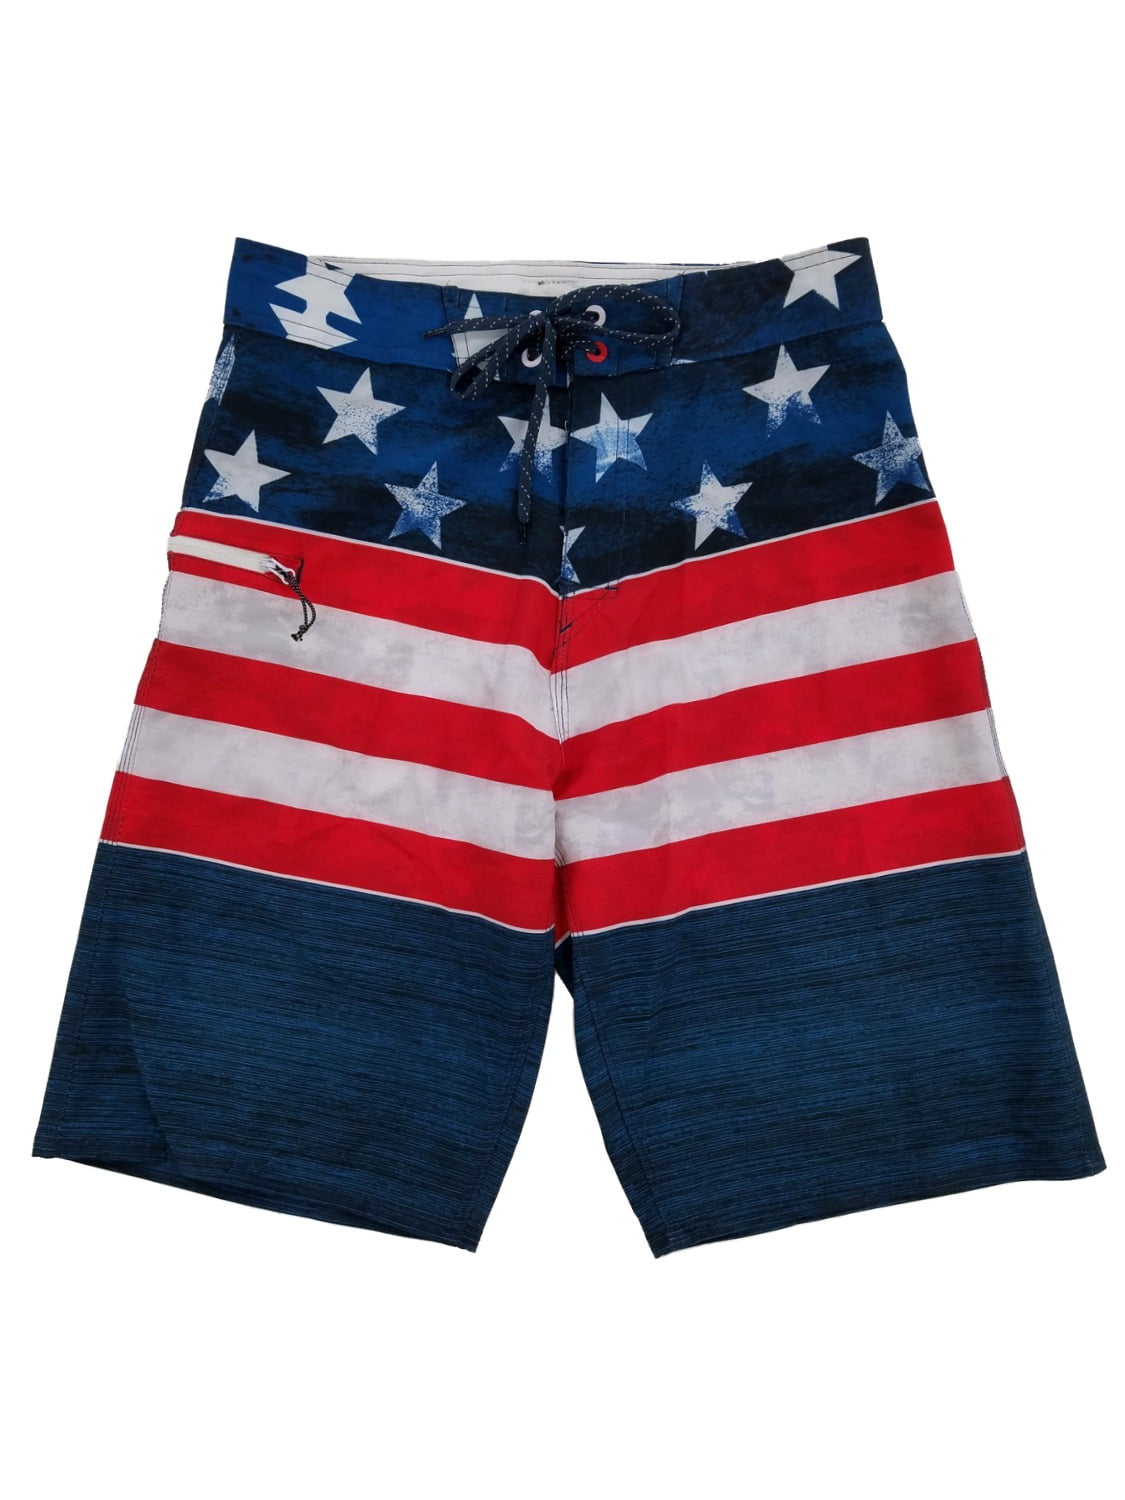 George Men's Patriotic American Flag Swim Trunks Bathing Suit Board Shorts 